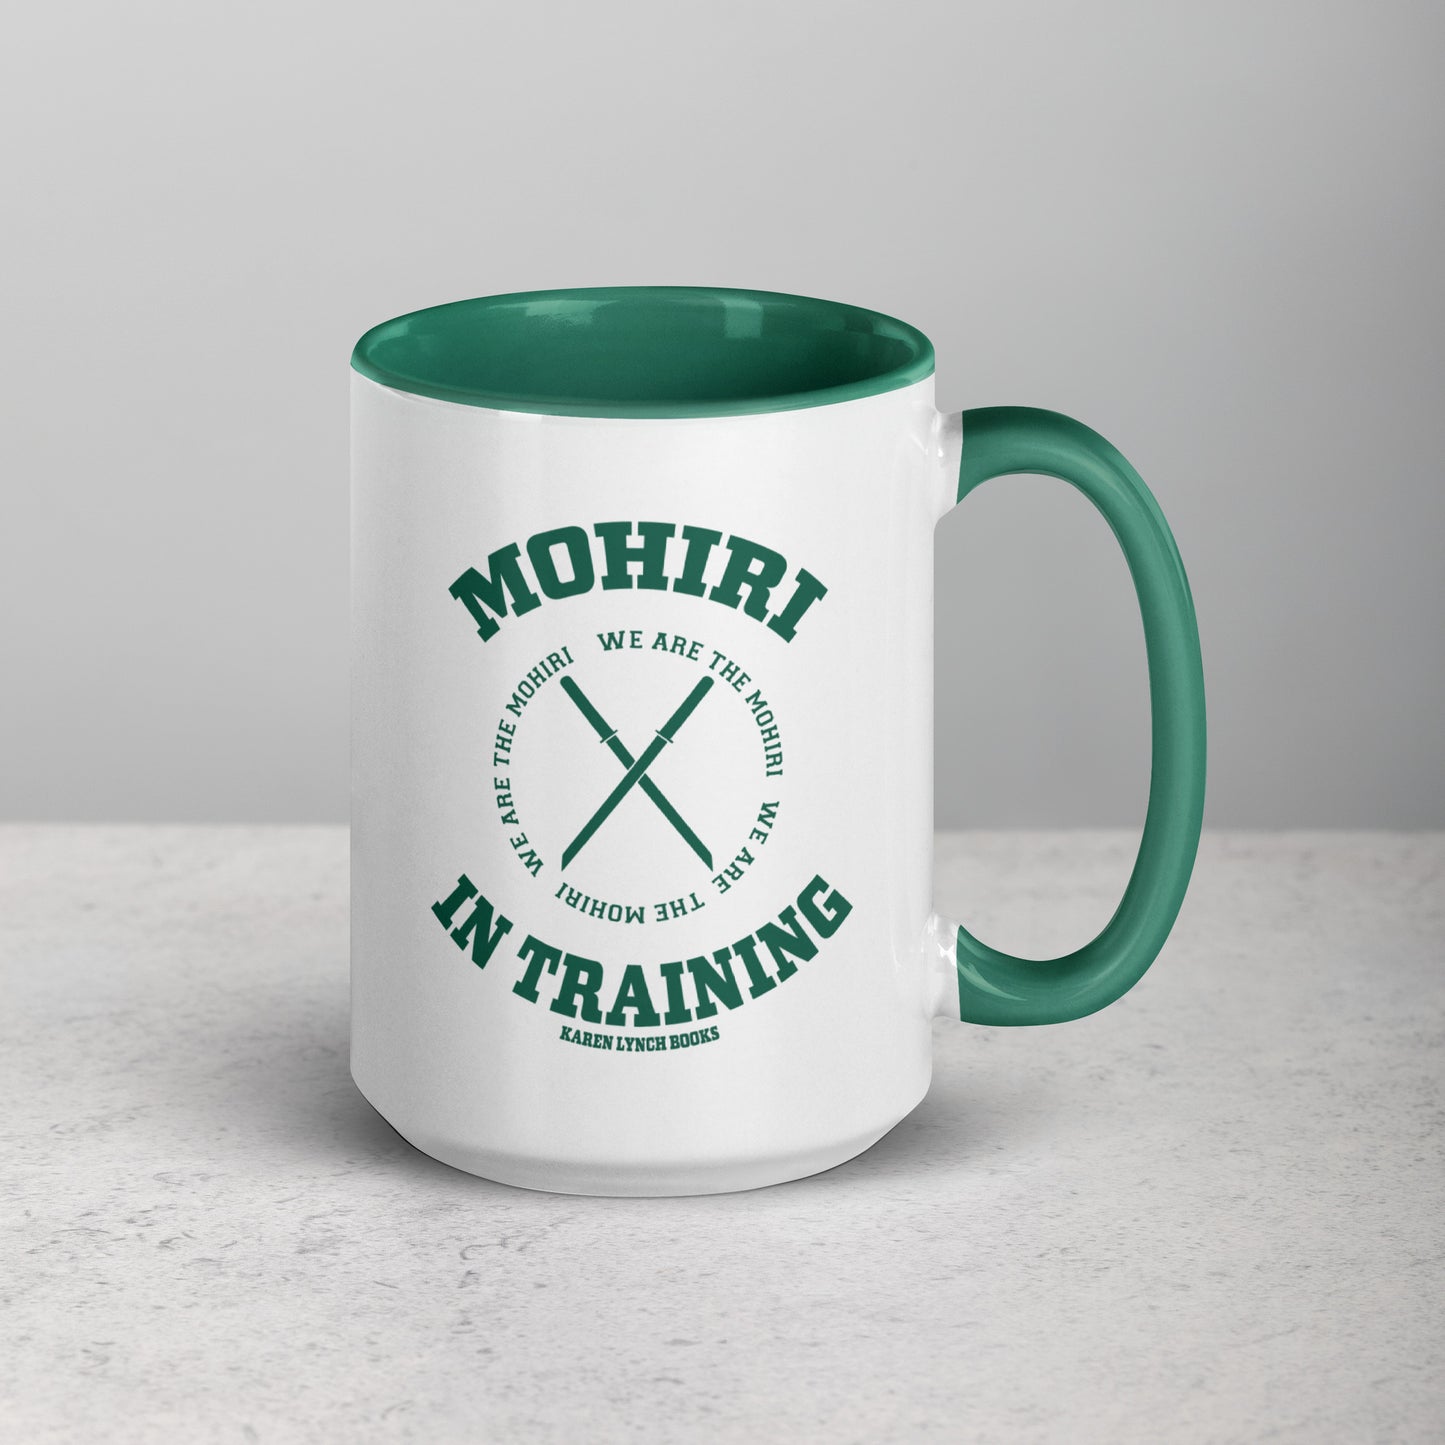 Mohiri in Training Mug